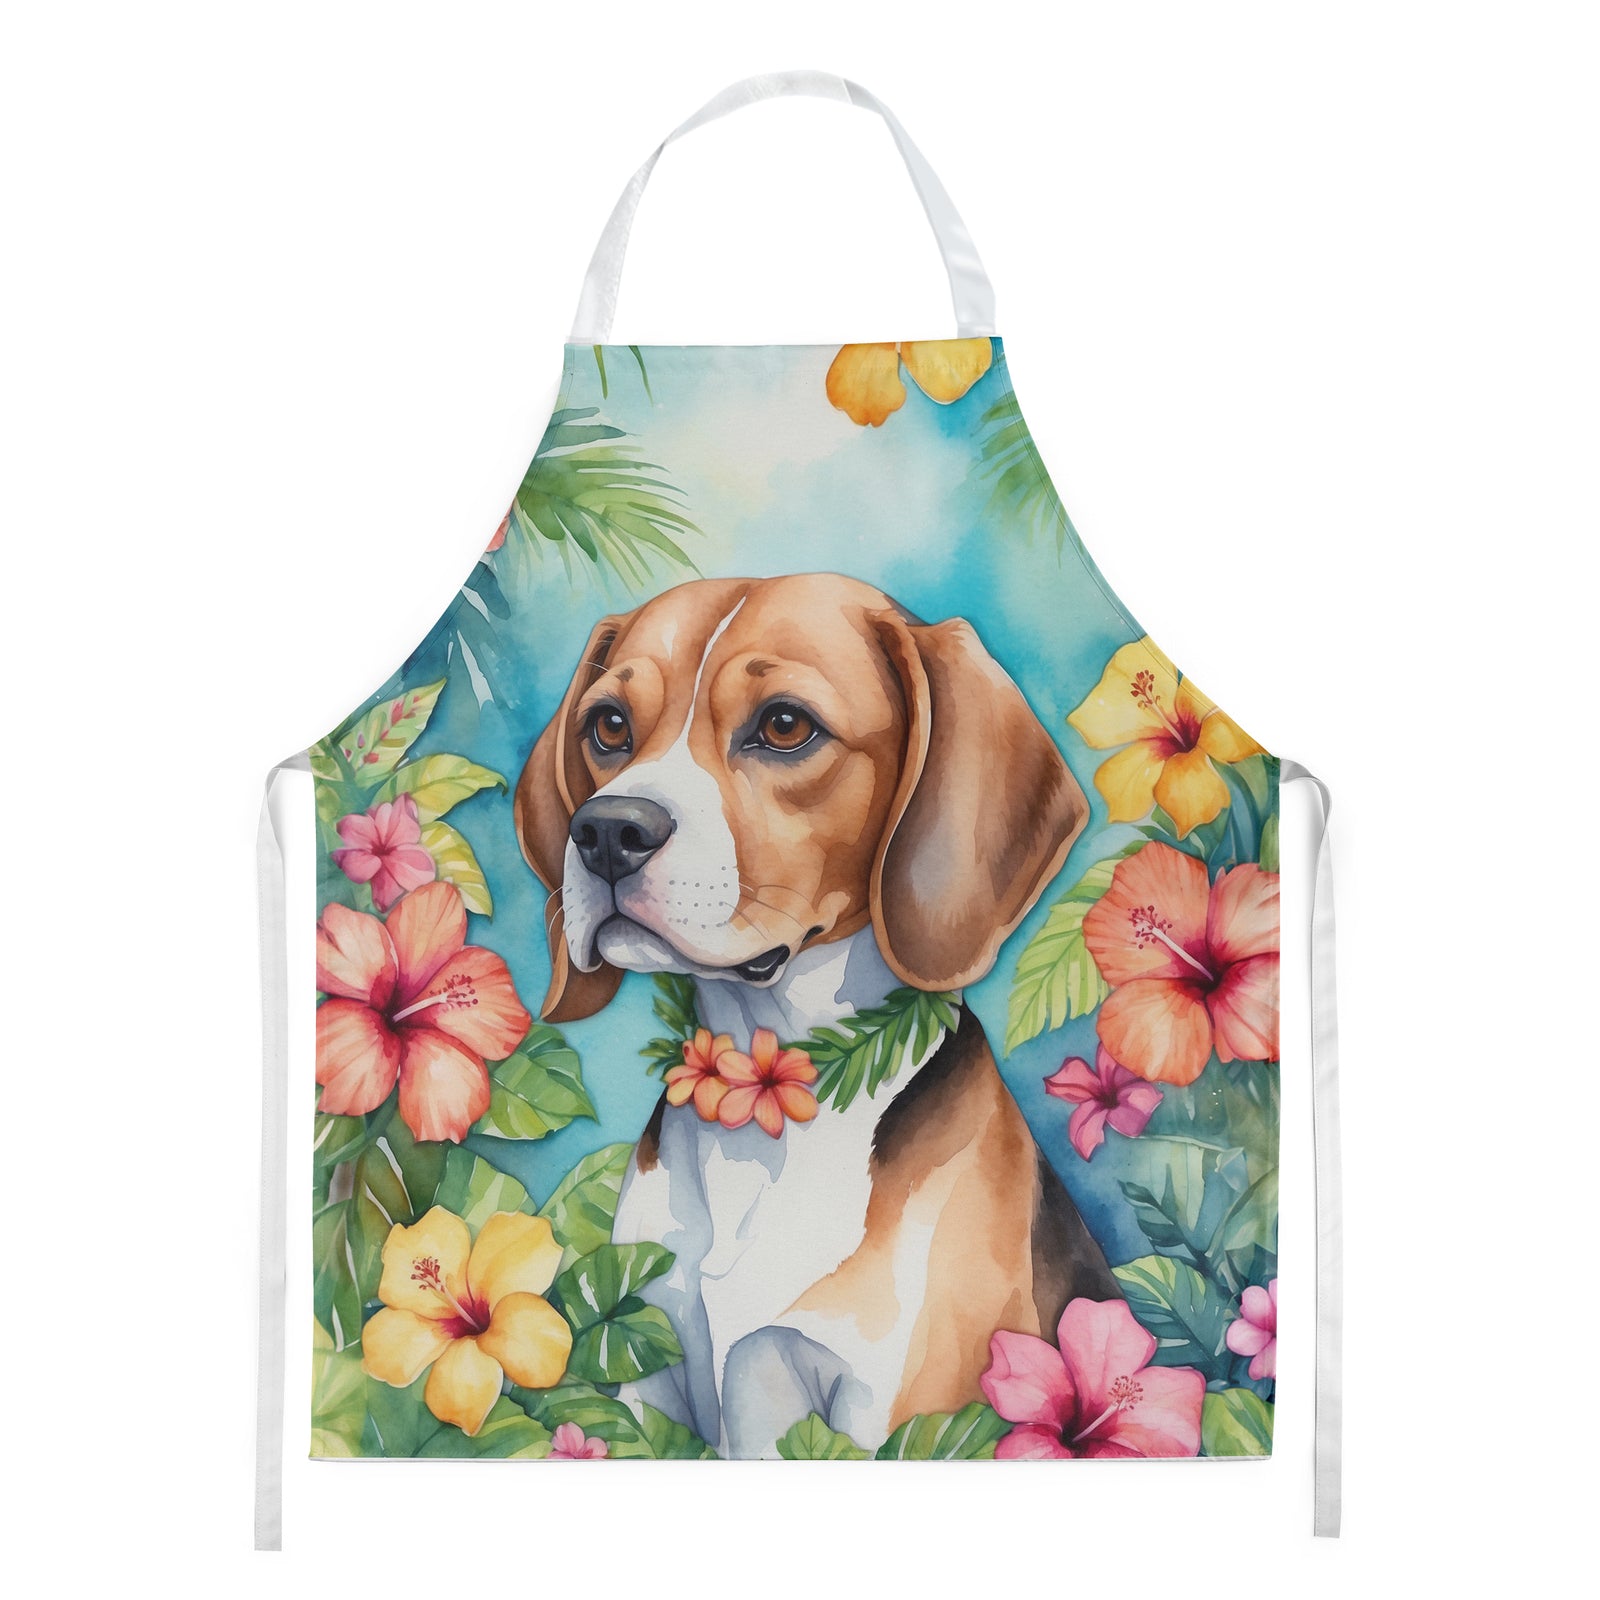 Buy this Beagle Luau Apron